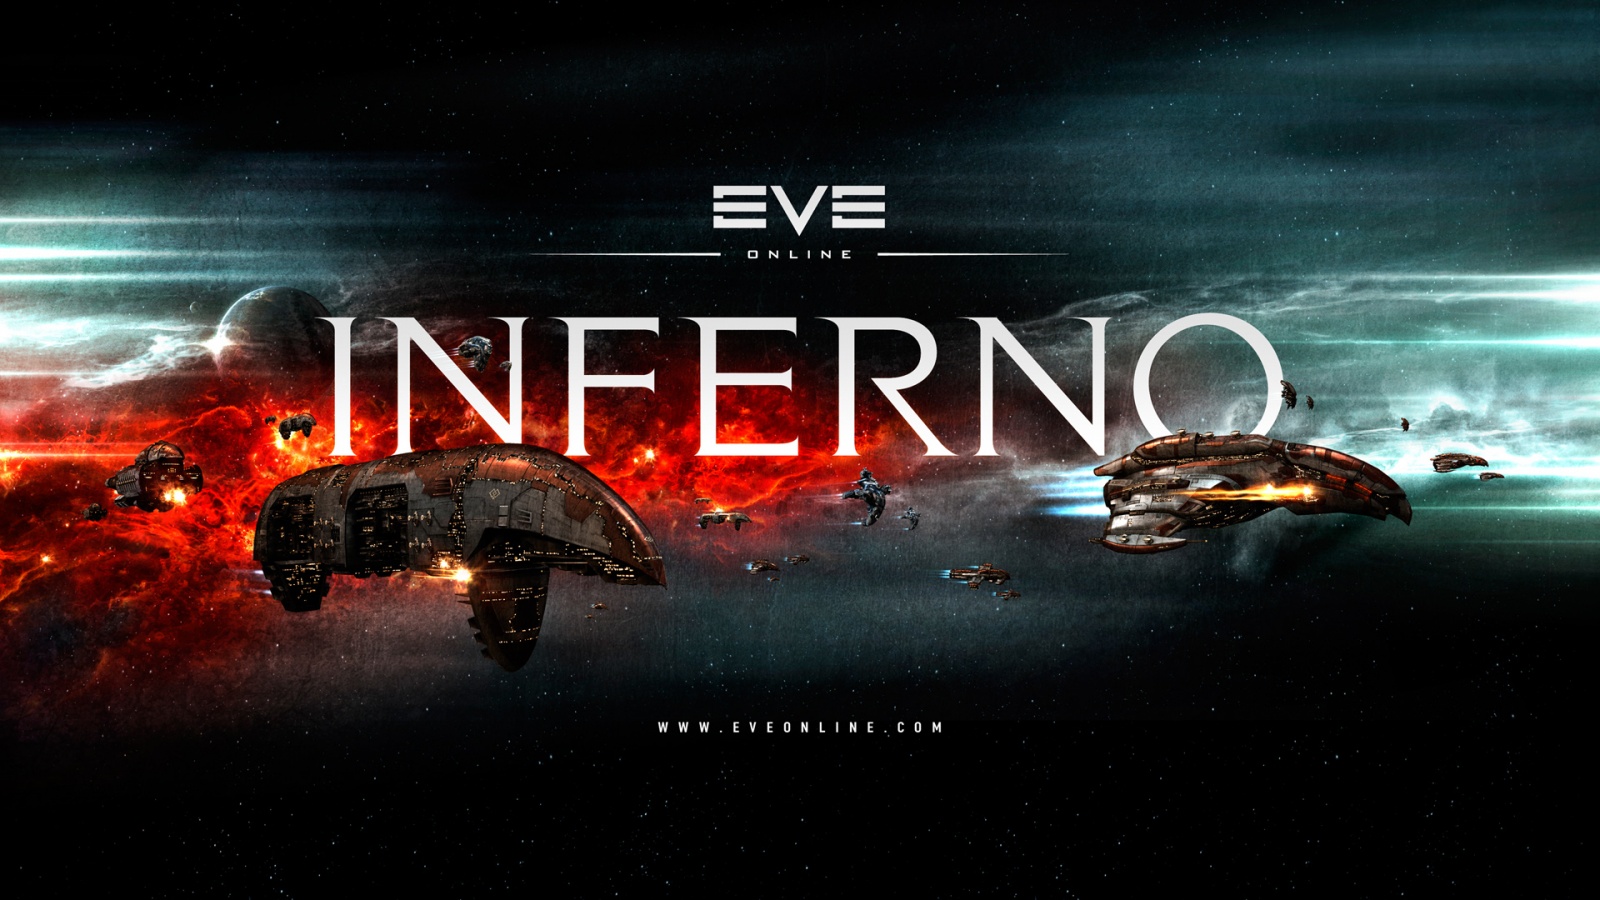 Eve Online Inferno Wallpaper HD